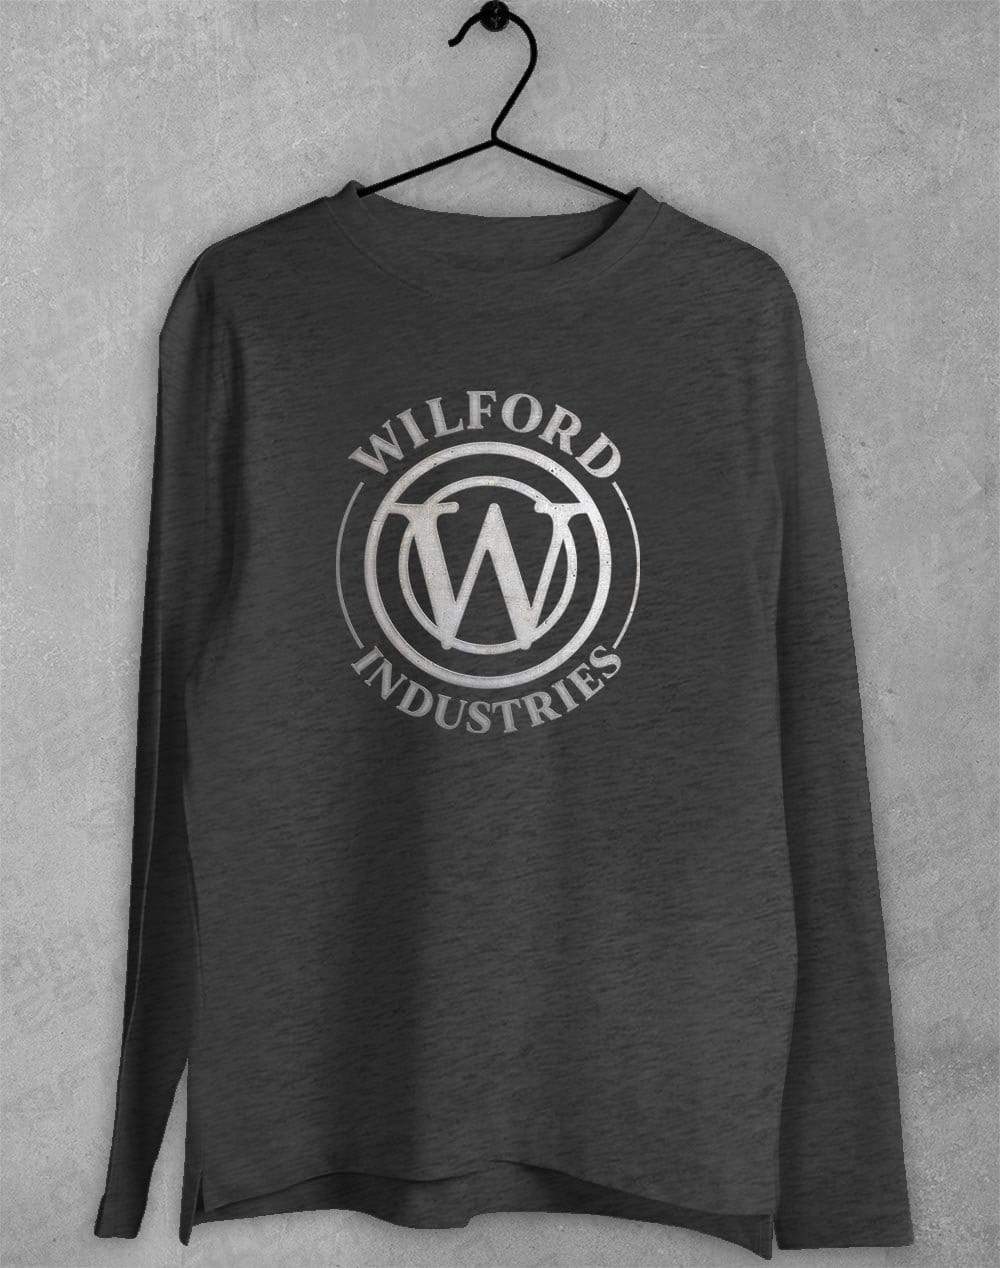 Wilford Industries Long Sleeve T-Shirt S / Dark Heather  - Off World Tees